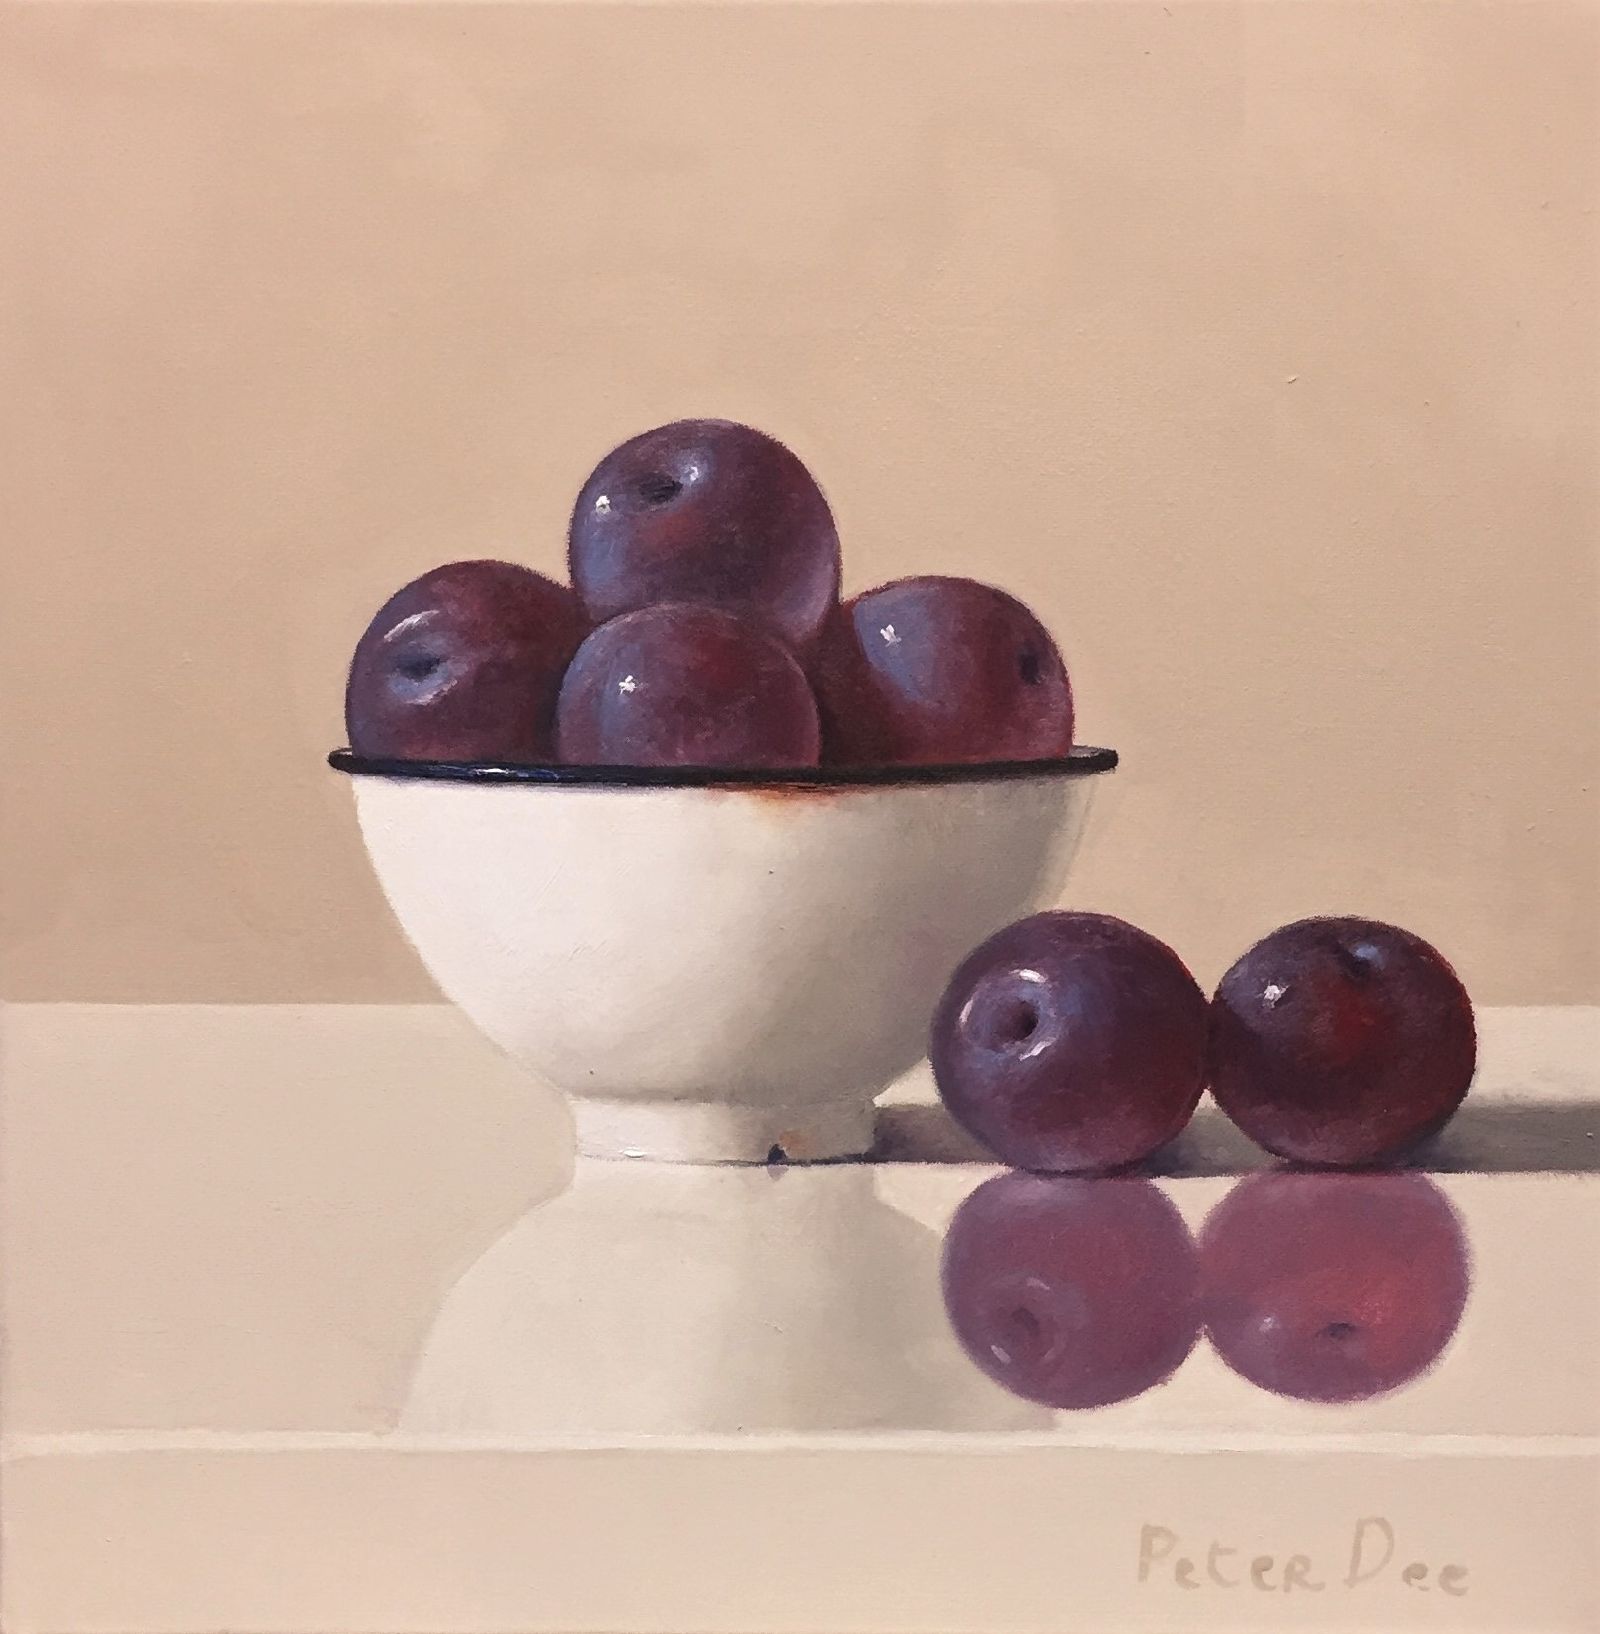 Peter Dee - Bowl of Plums